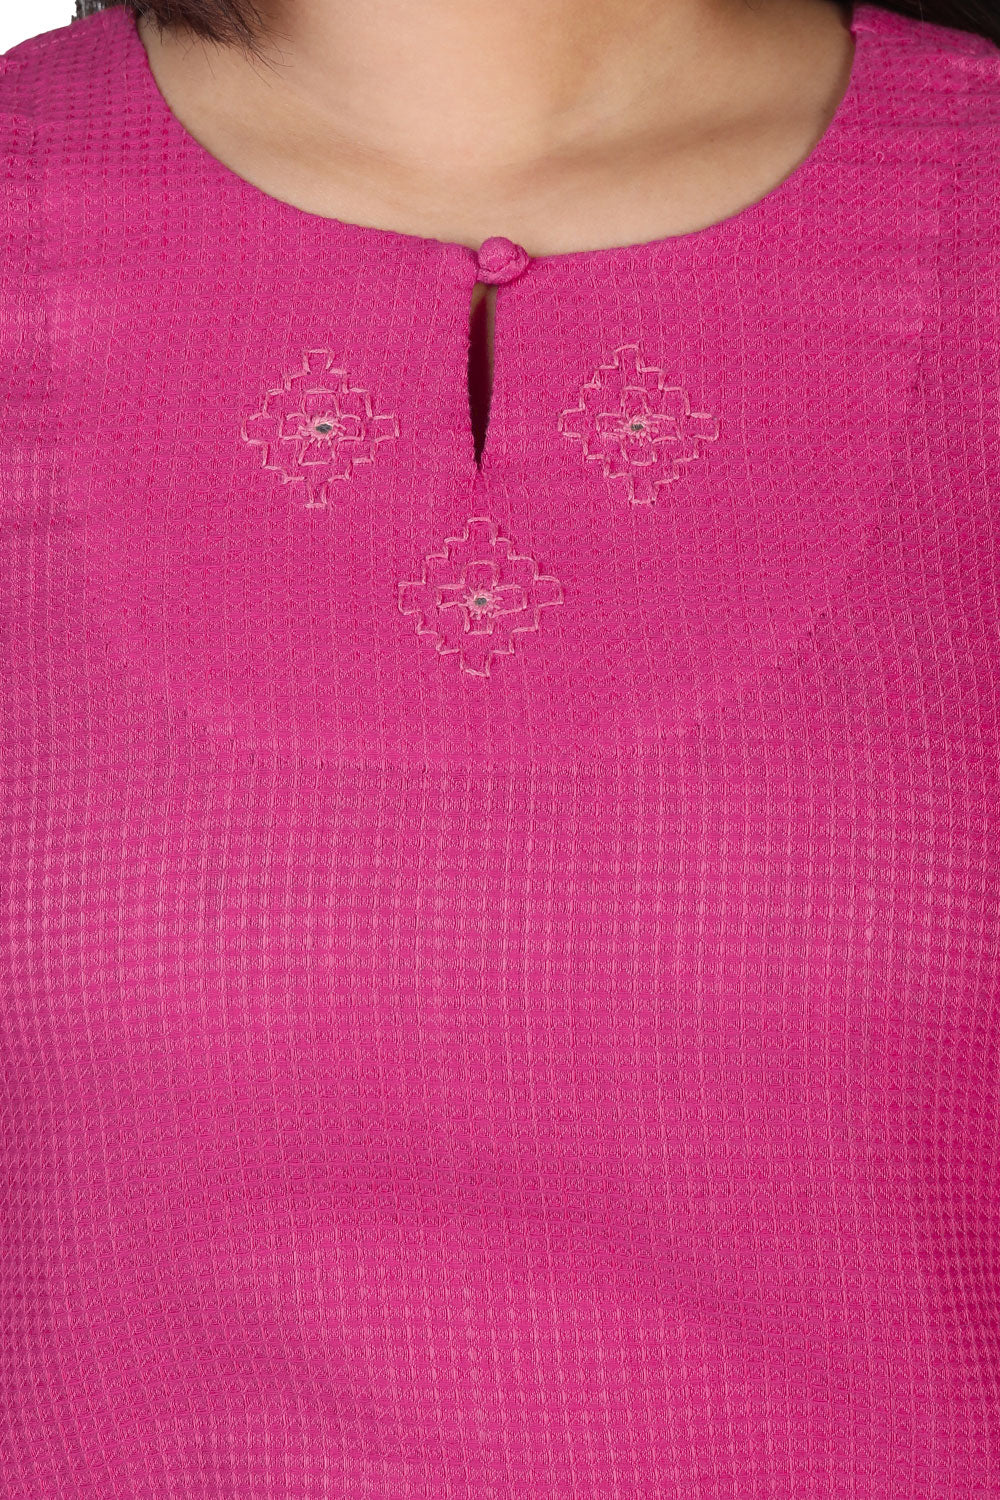 Soft loop weave cotton kurta with Kasuti hand embroidery.